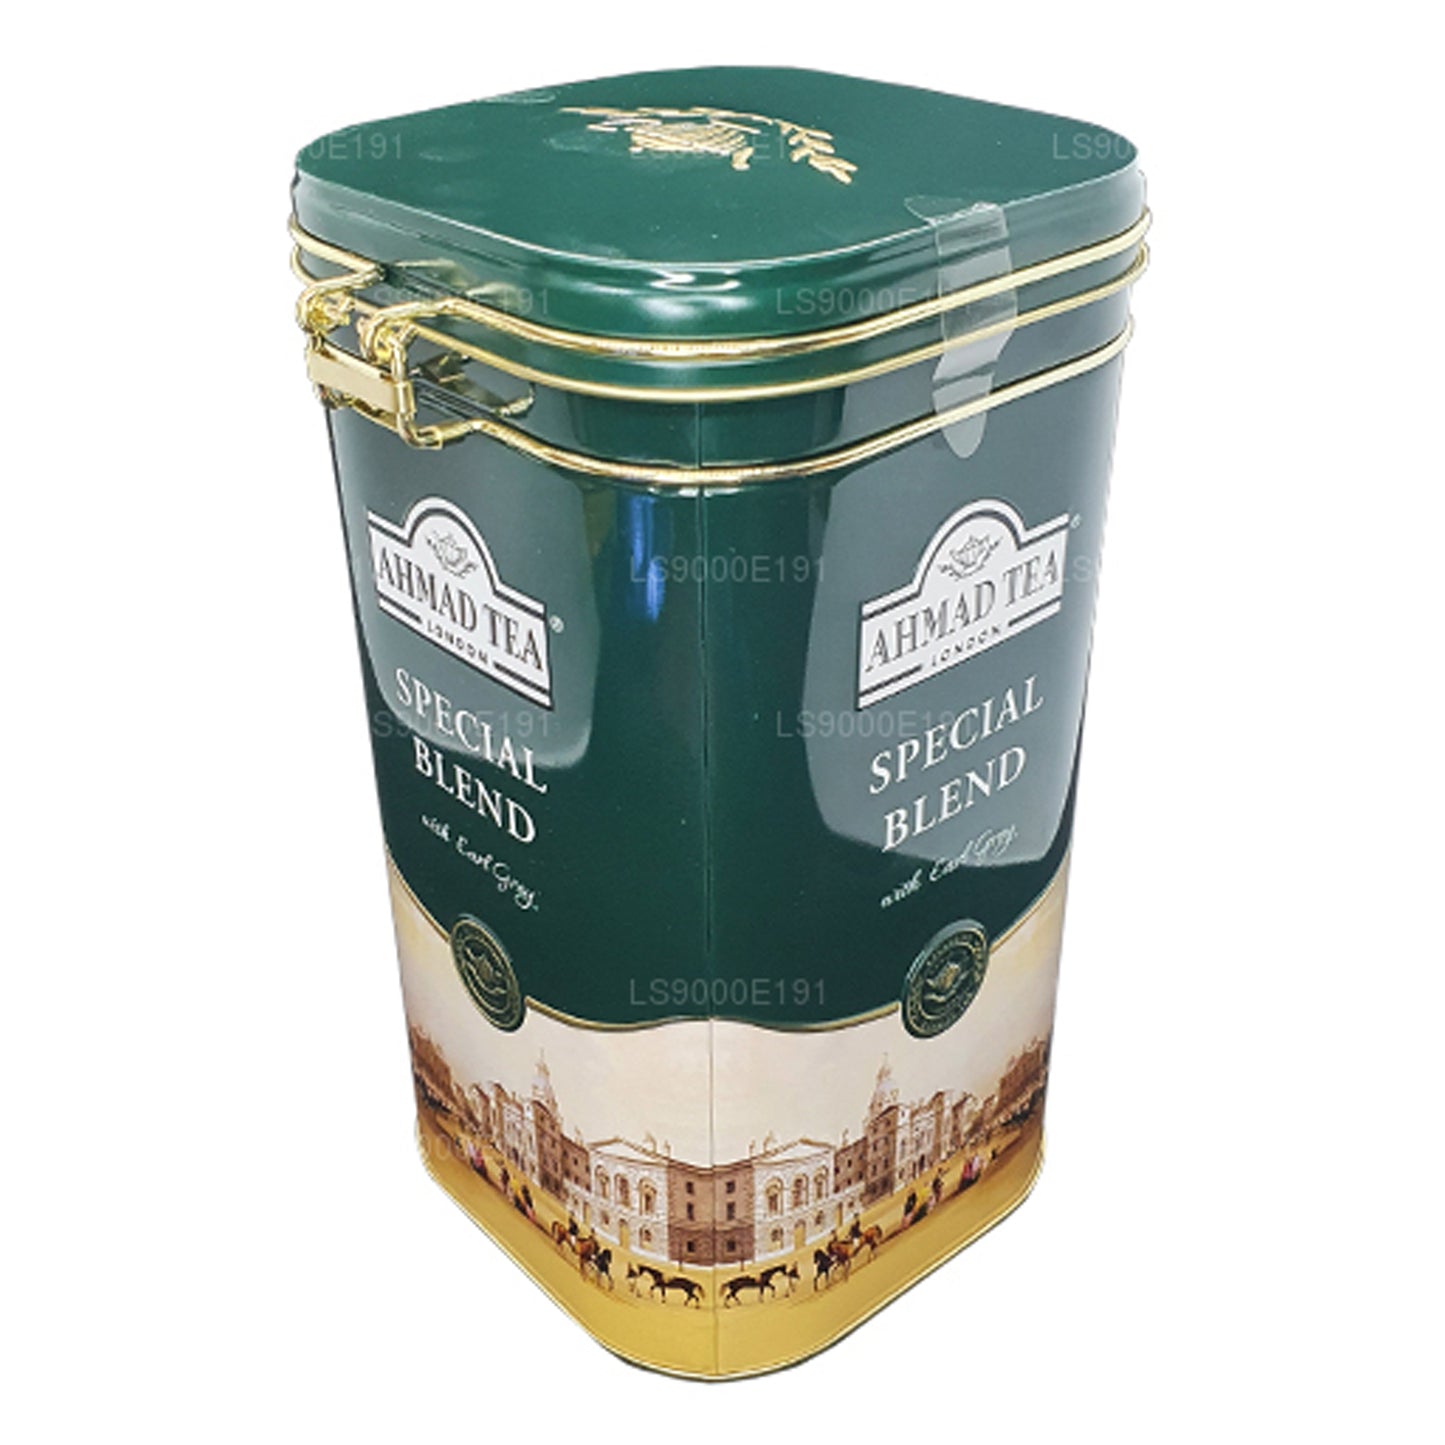 Carrito con bisagras Ahmad Tea Special Blend (450 g)